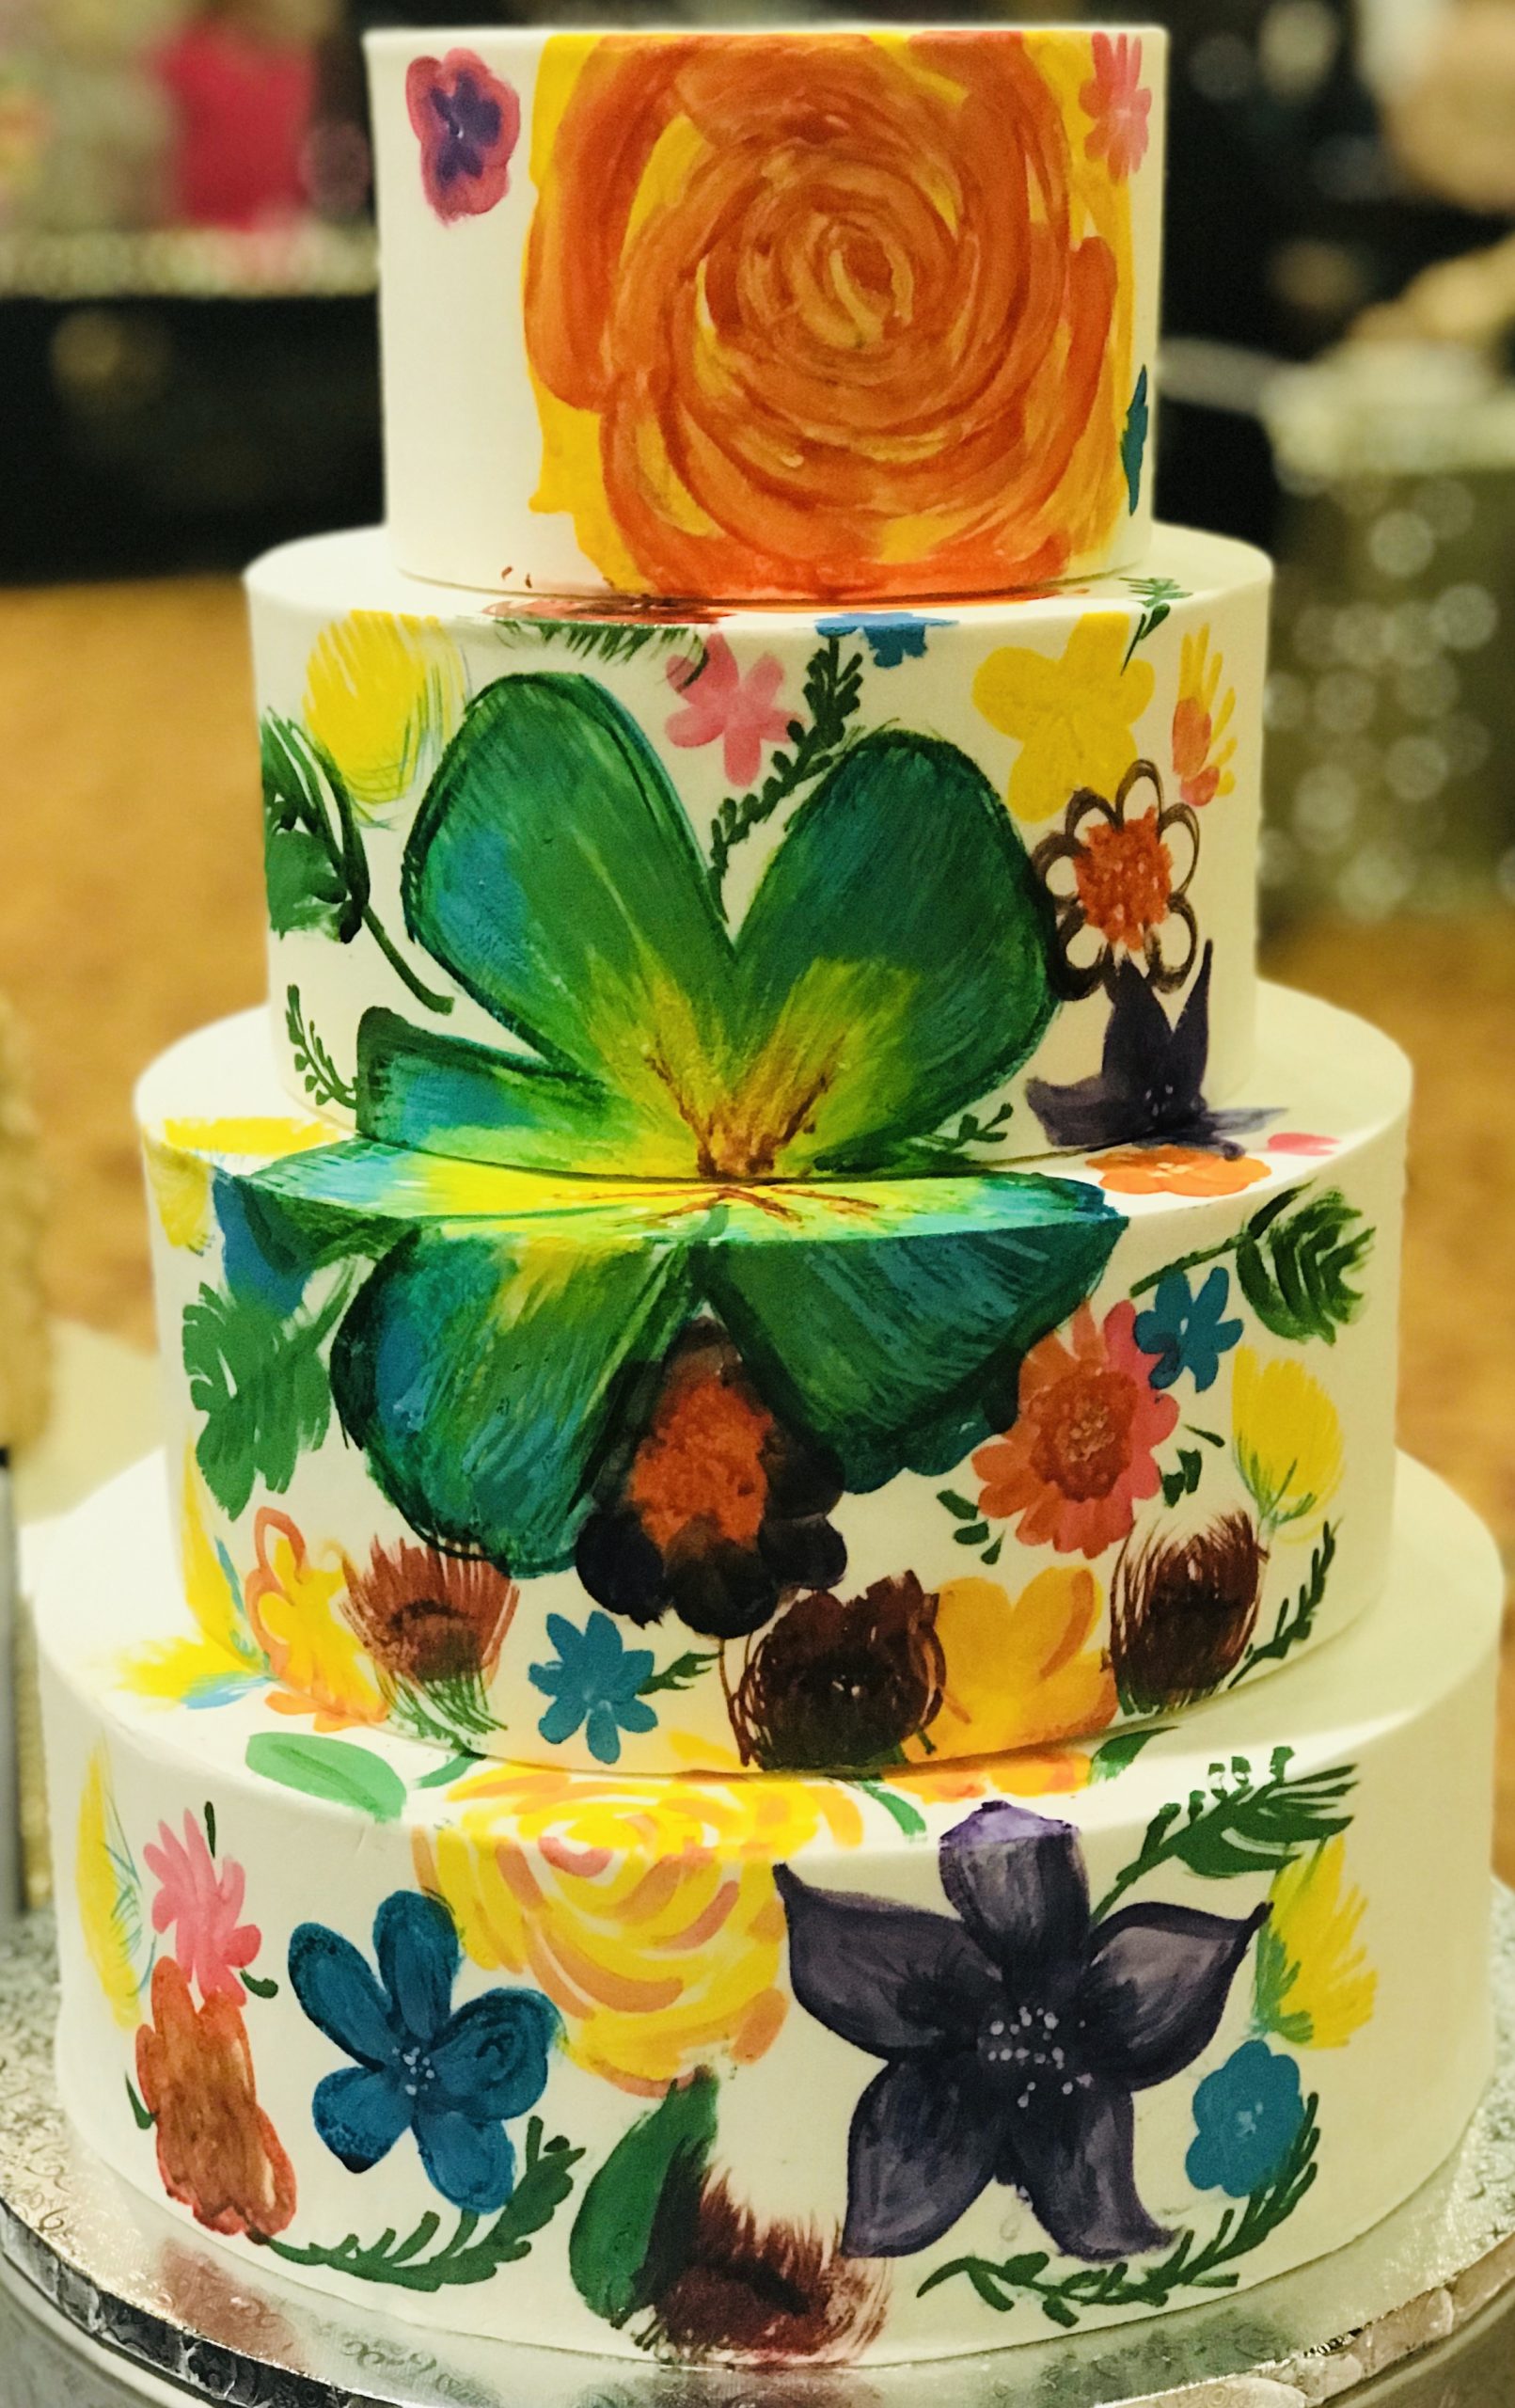 Cake Art